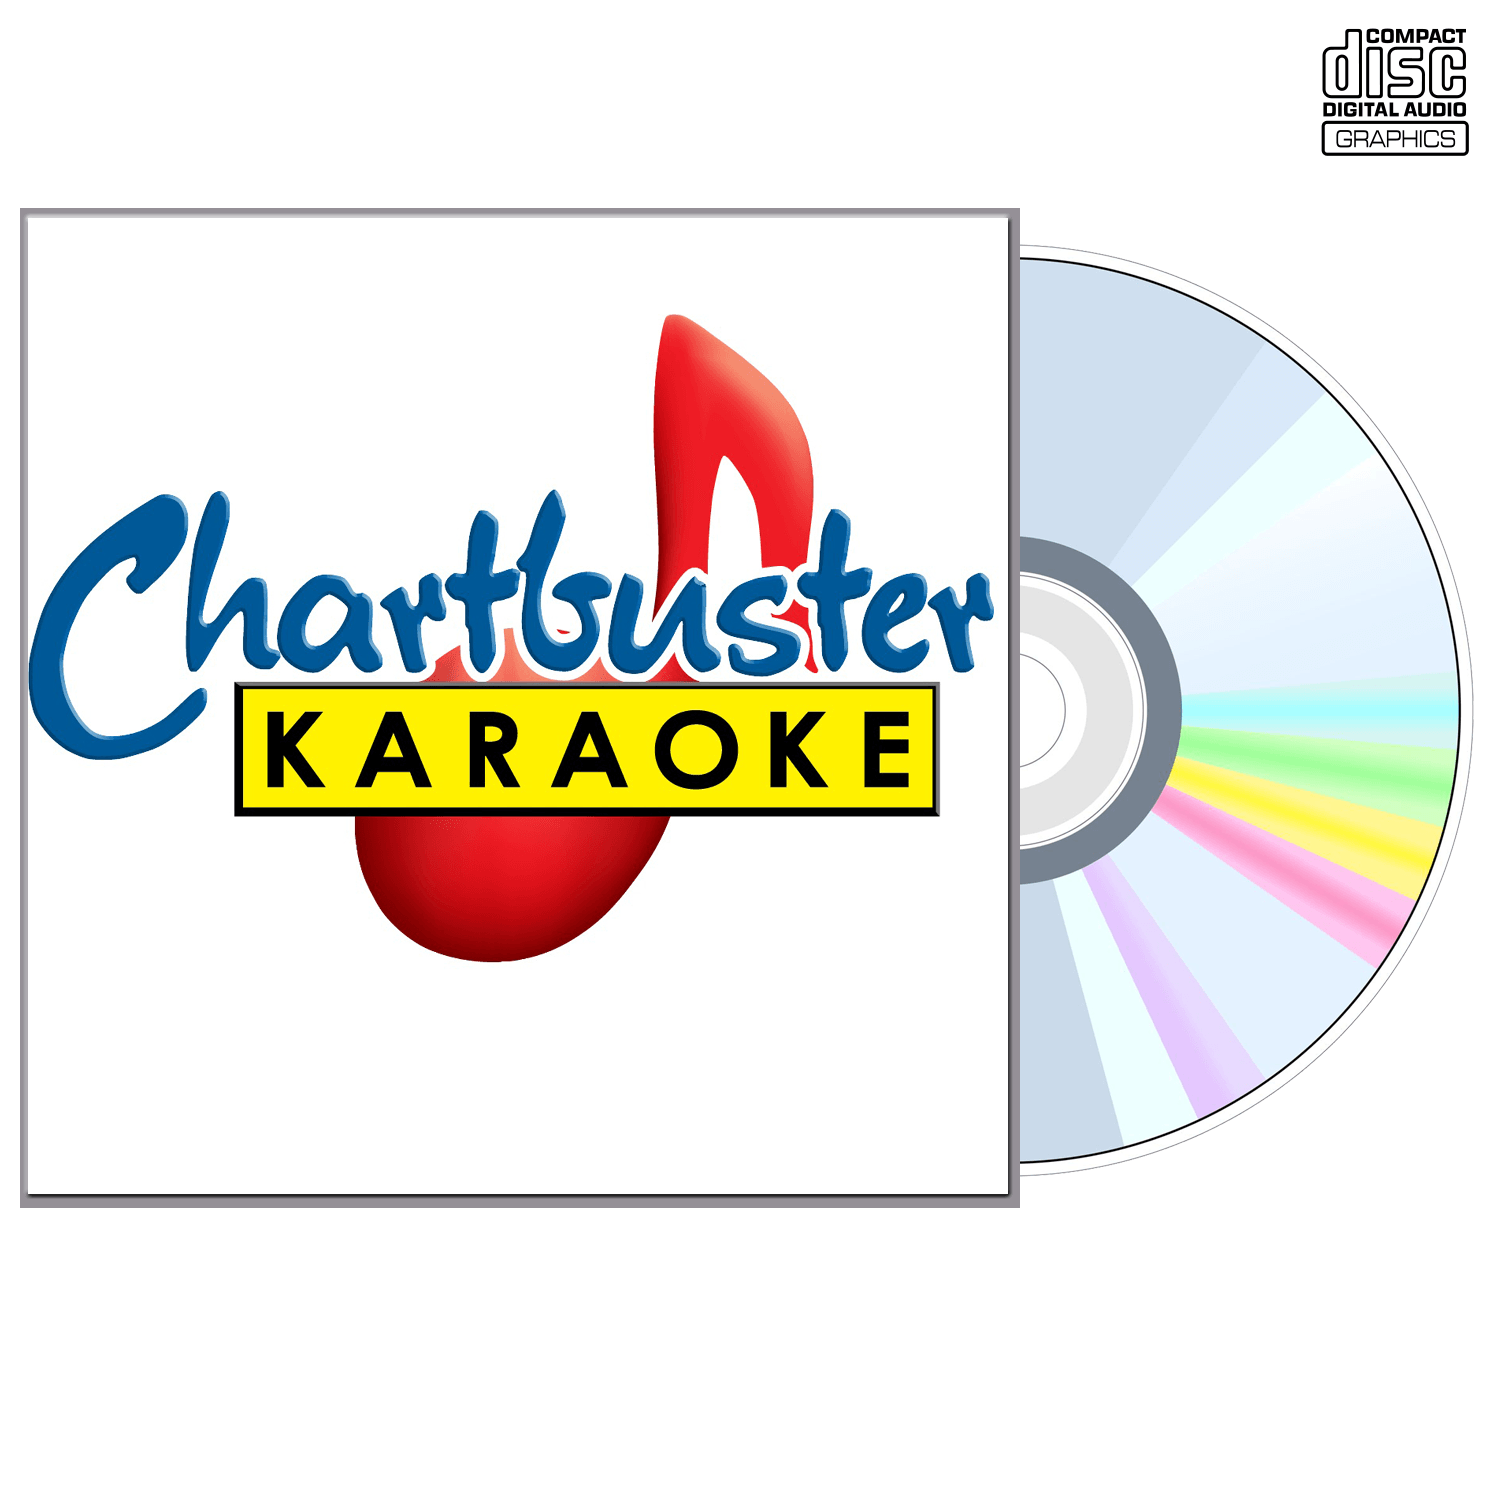 70's Collection Vol 08 - CD+G - Chartbuster Karaoke - Karaoke Home Entertainment